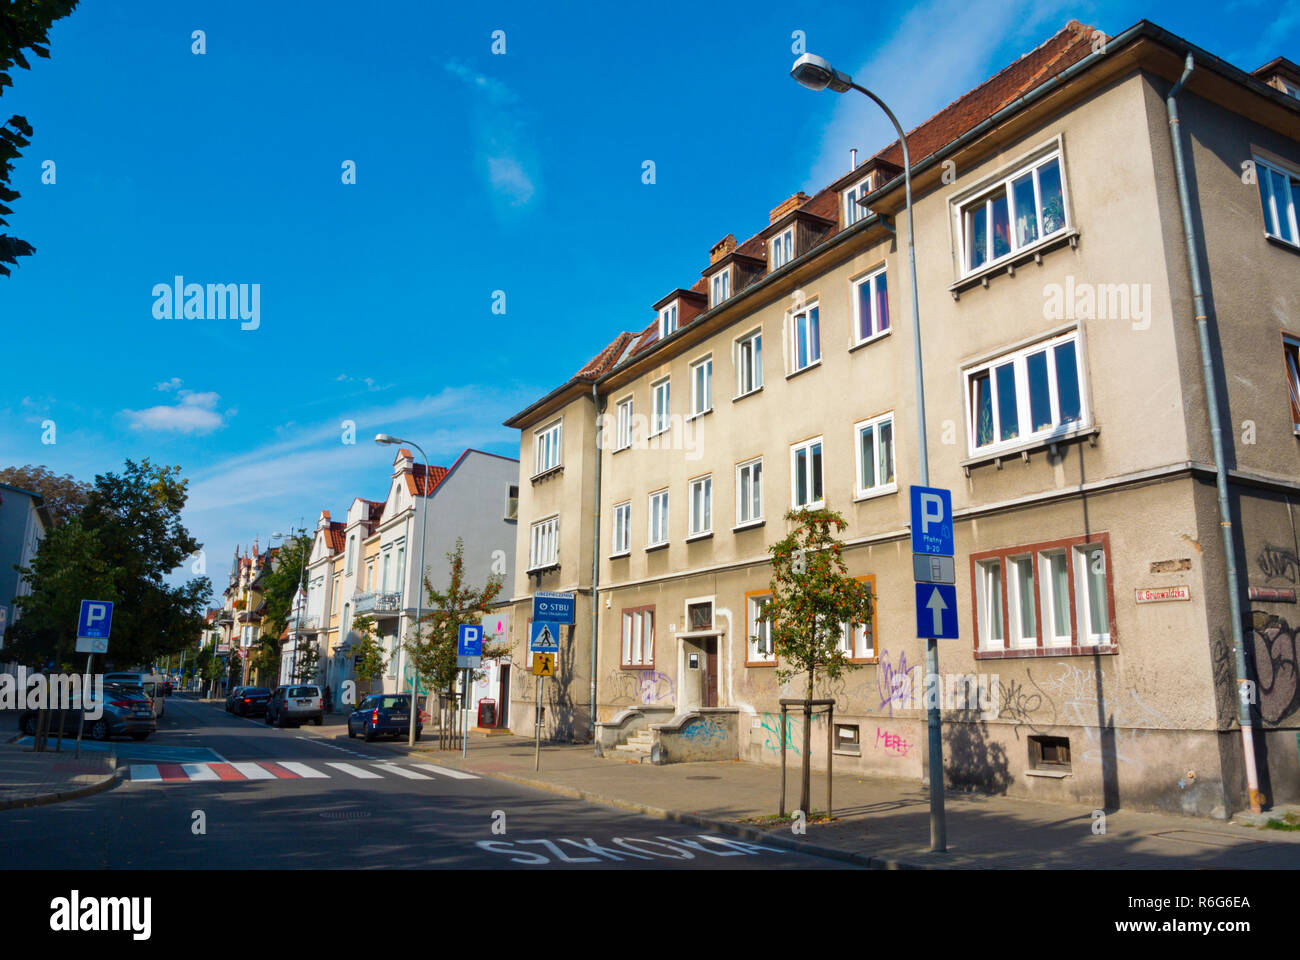 Grunwaldzka, street with historical building typical for the area, Dolny Sopot area, Sopot, Poland Stock Photo